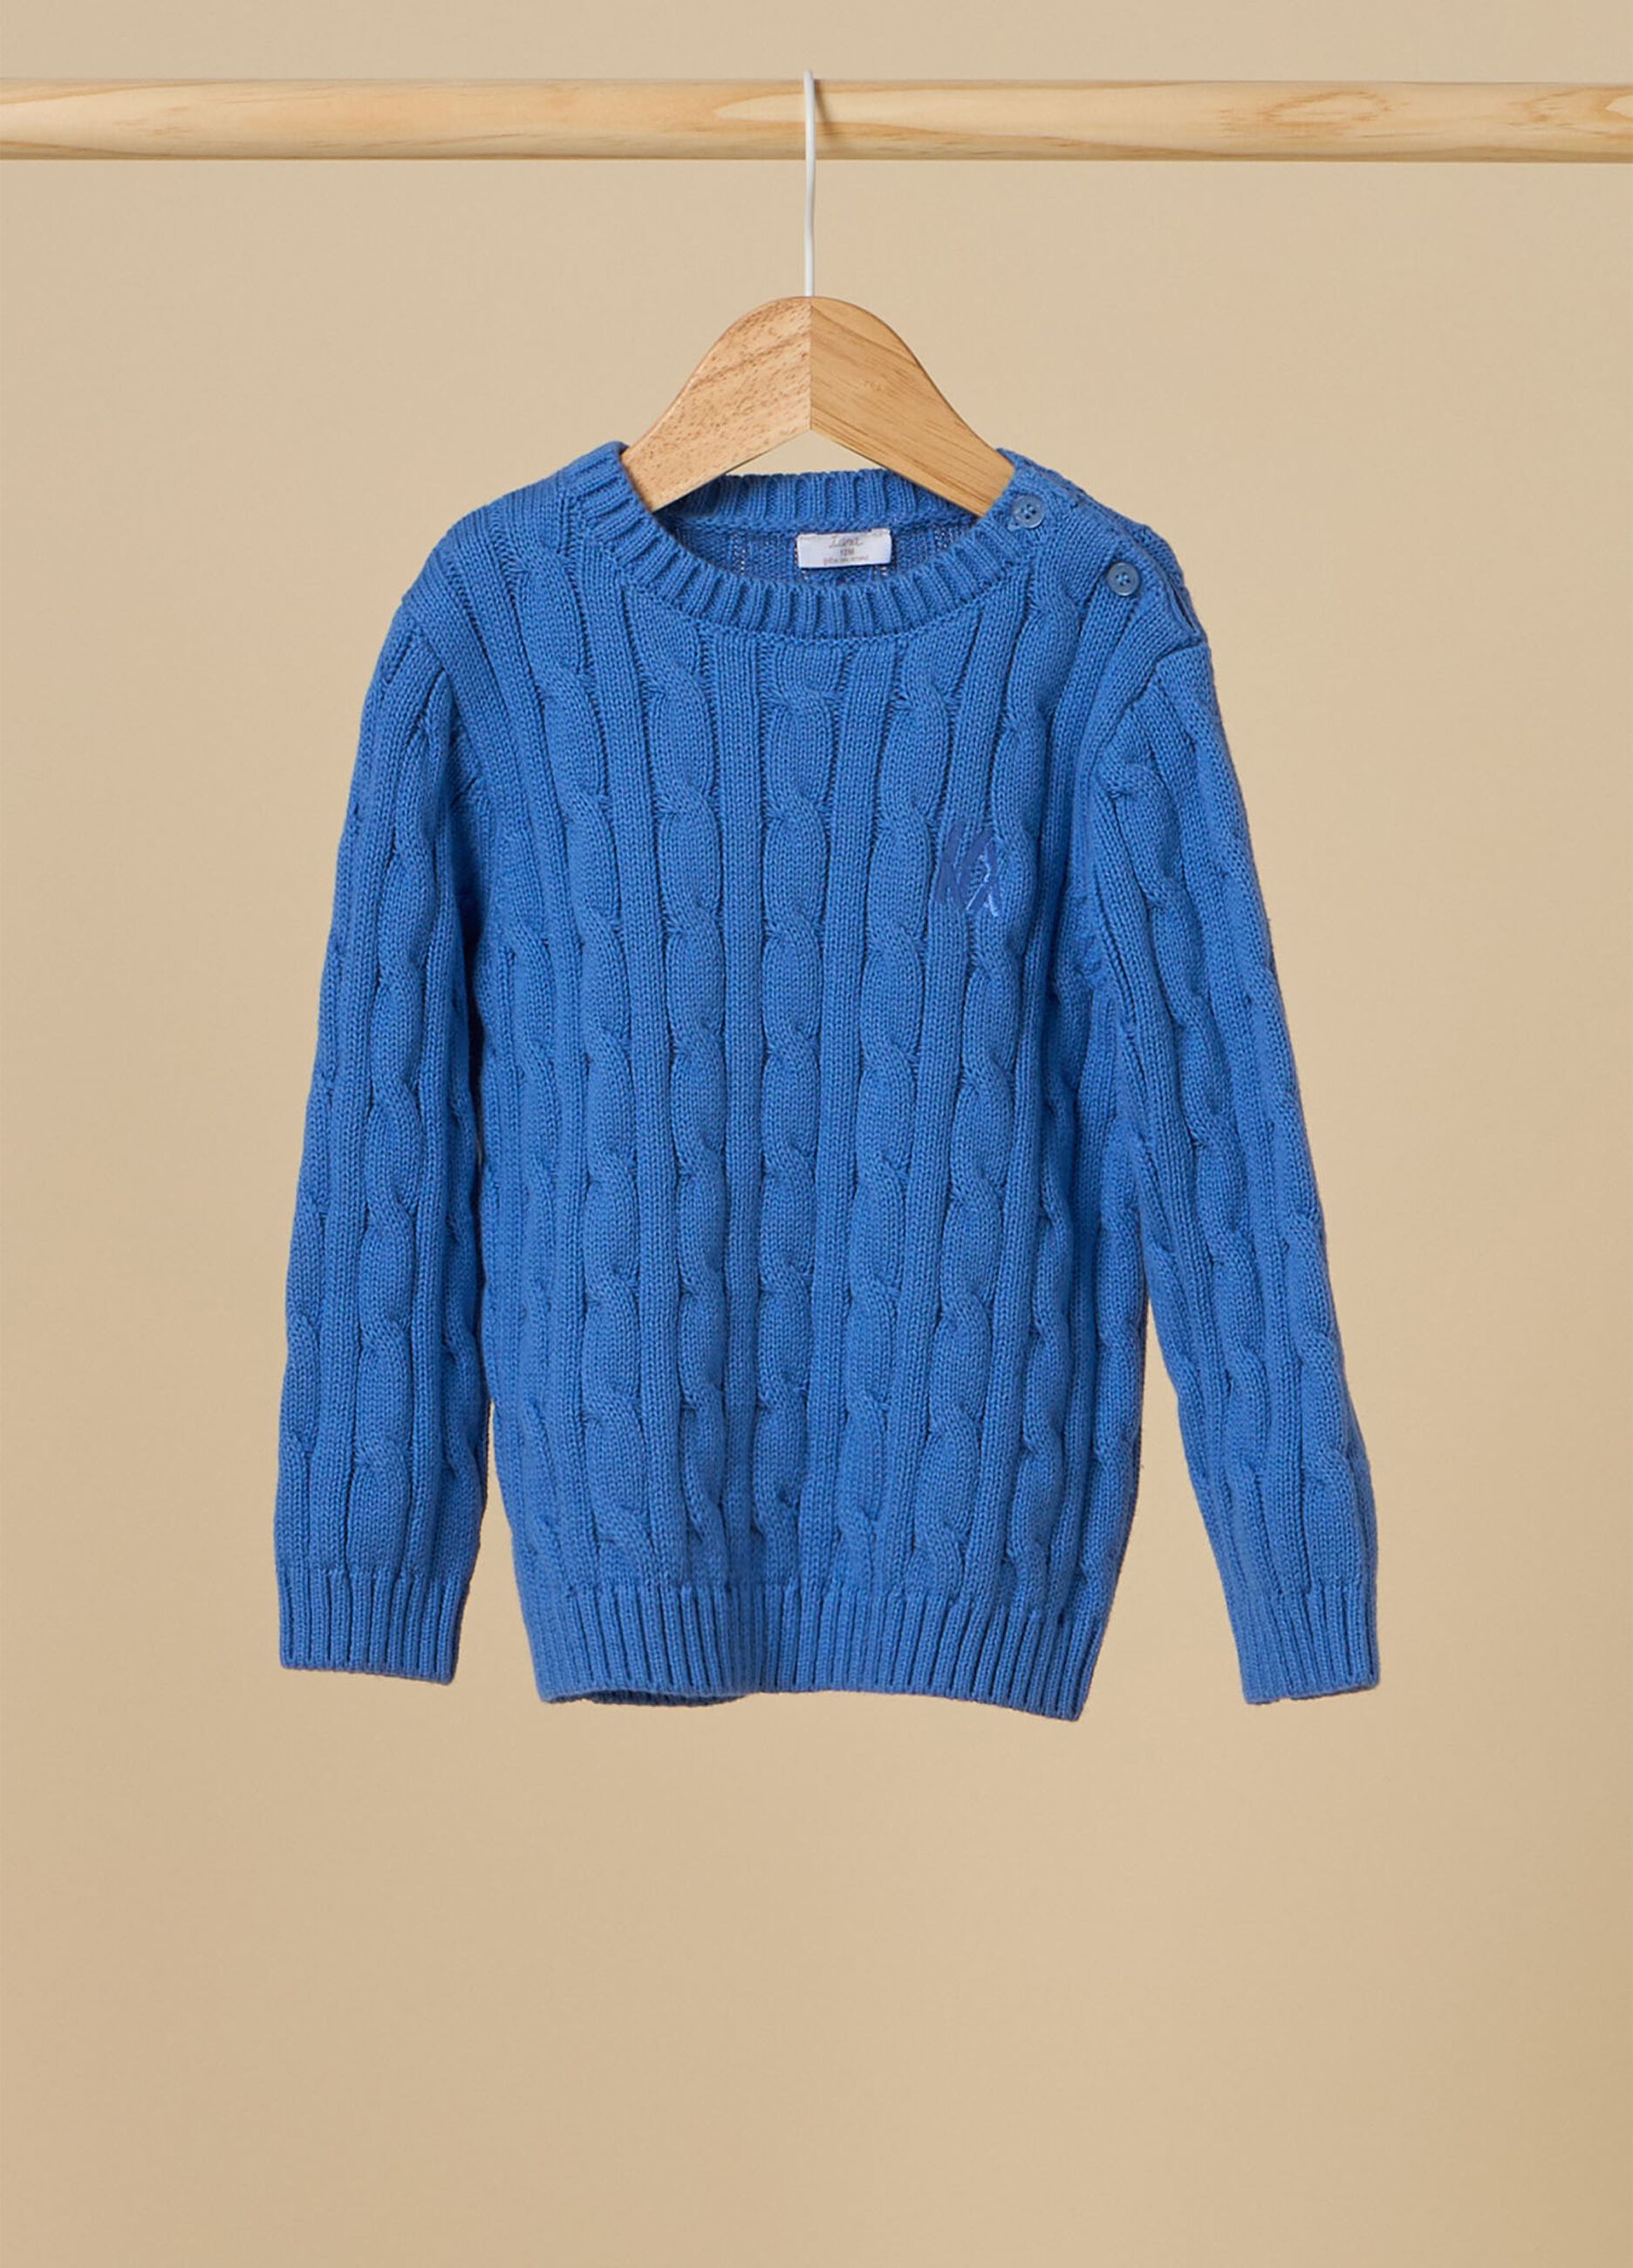 Cotton knit sweater